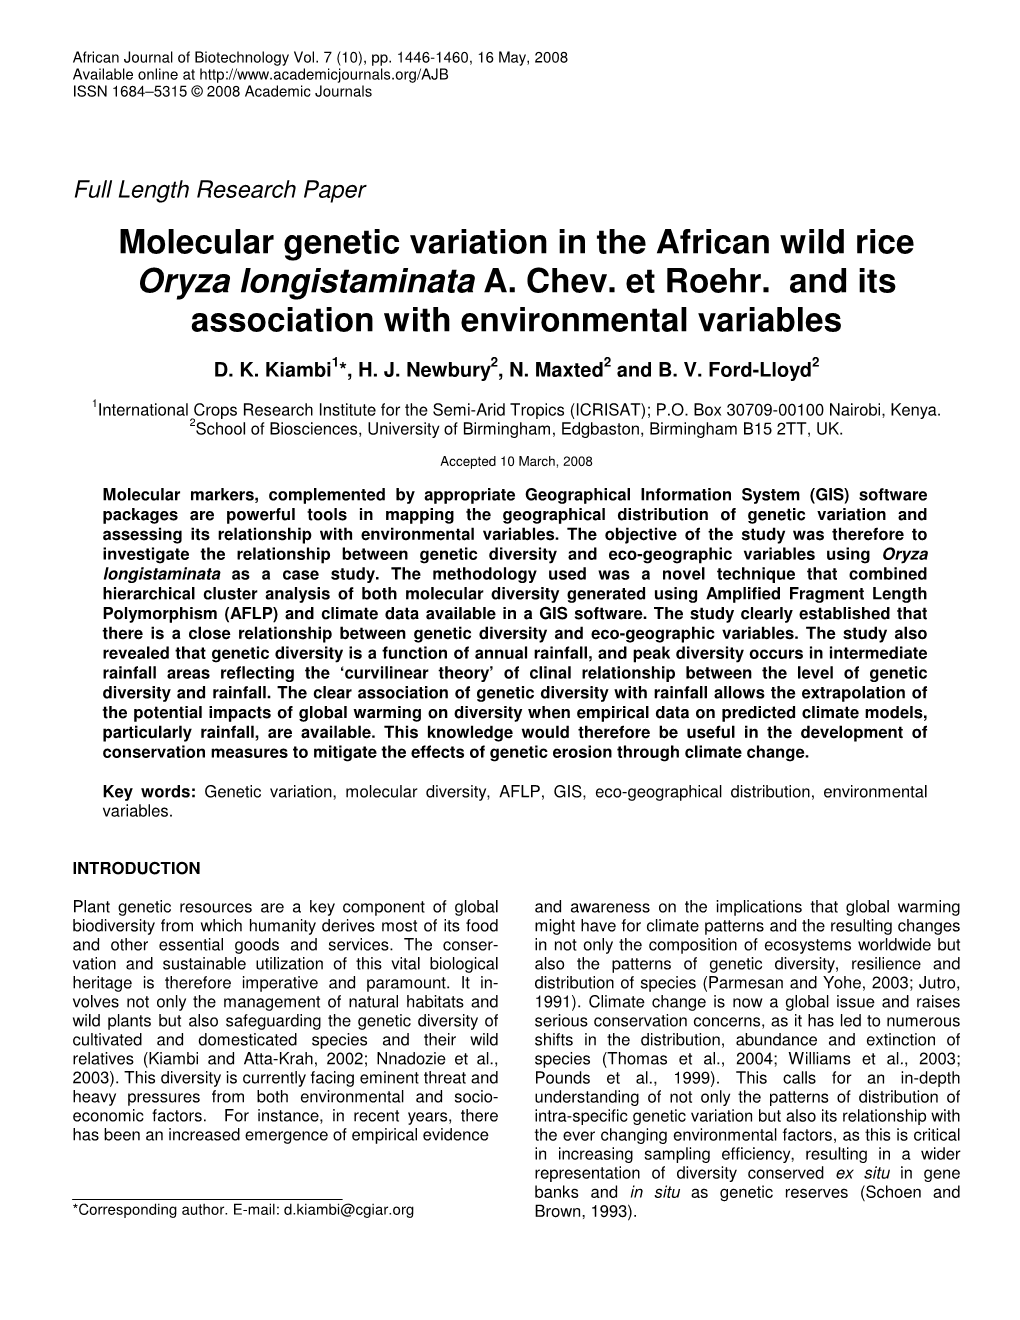 Molecular Genetic Variation in the African Wild Rice Oryza Longistaminata A